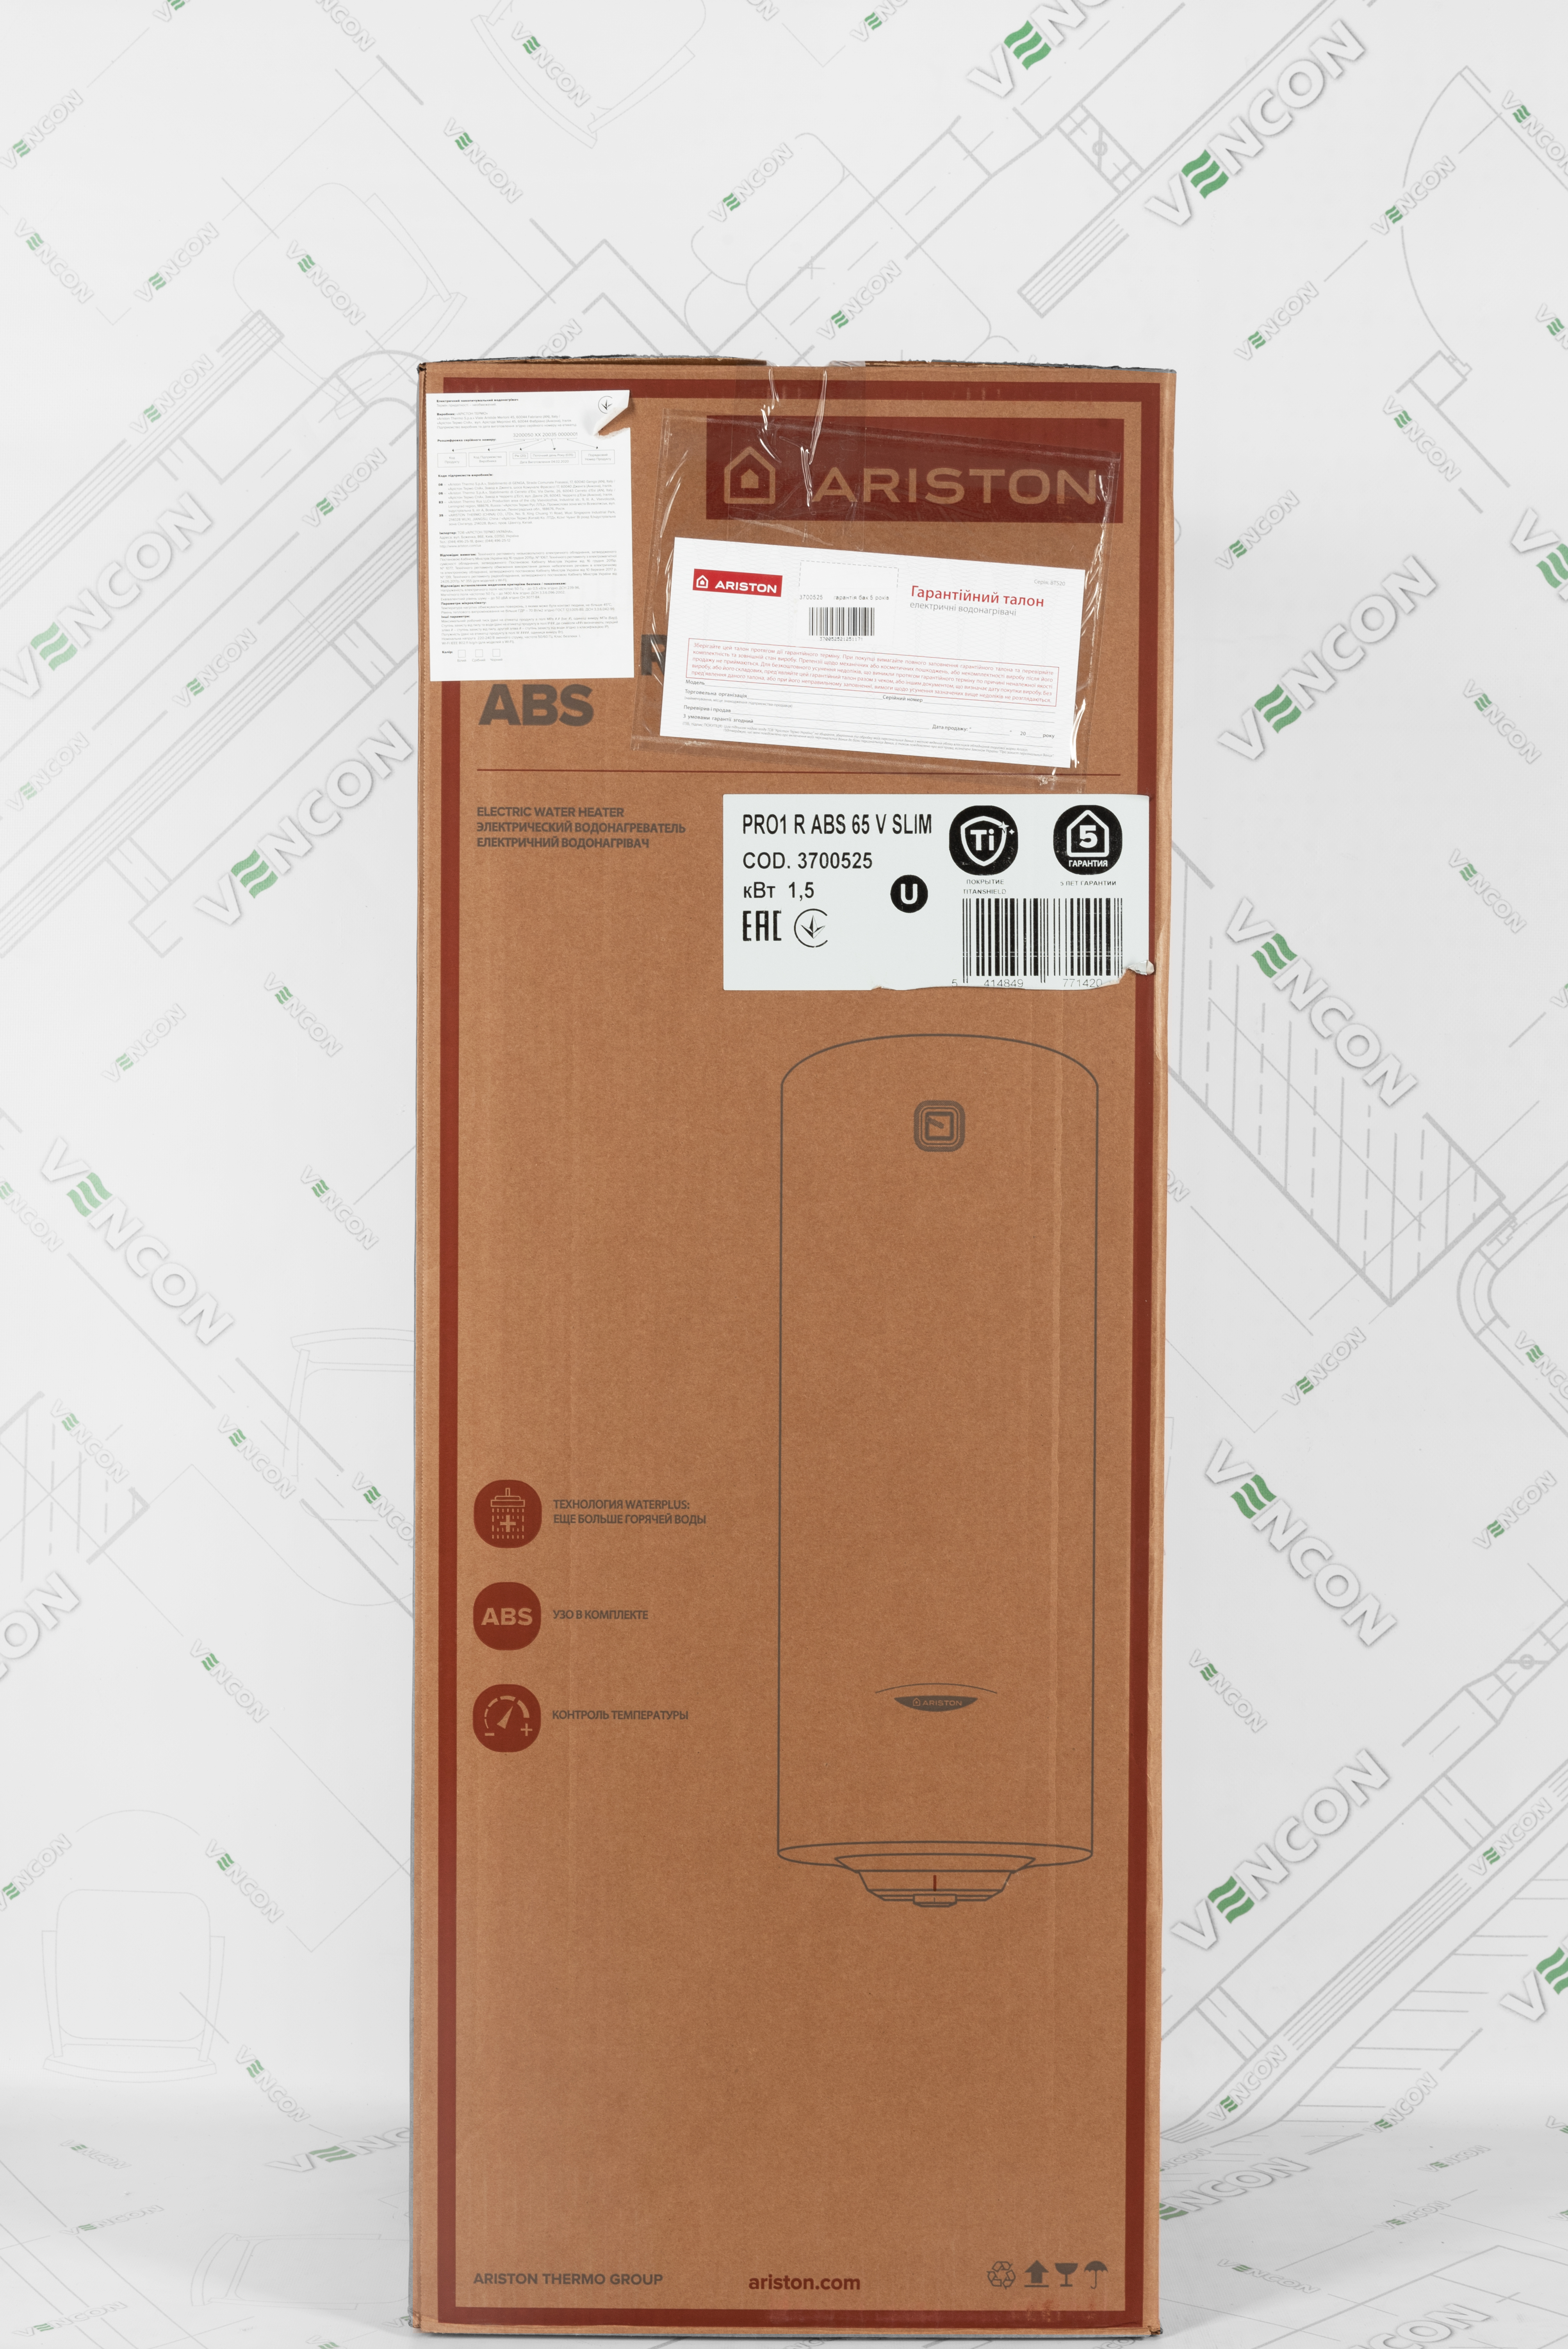 Ariston Pro1 R ABS 65 V SLIM в магазине - фото 17